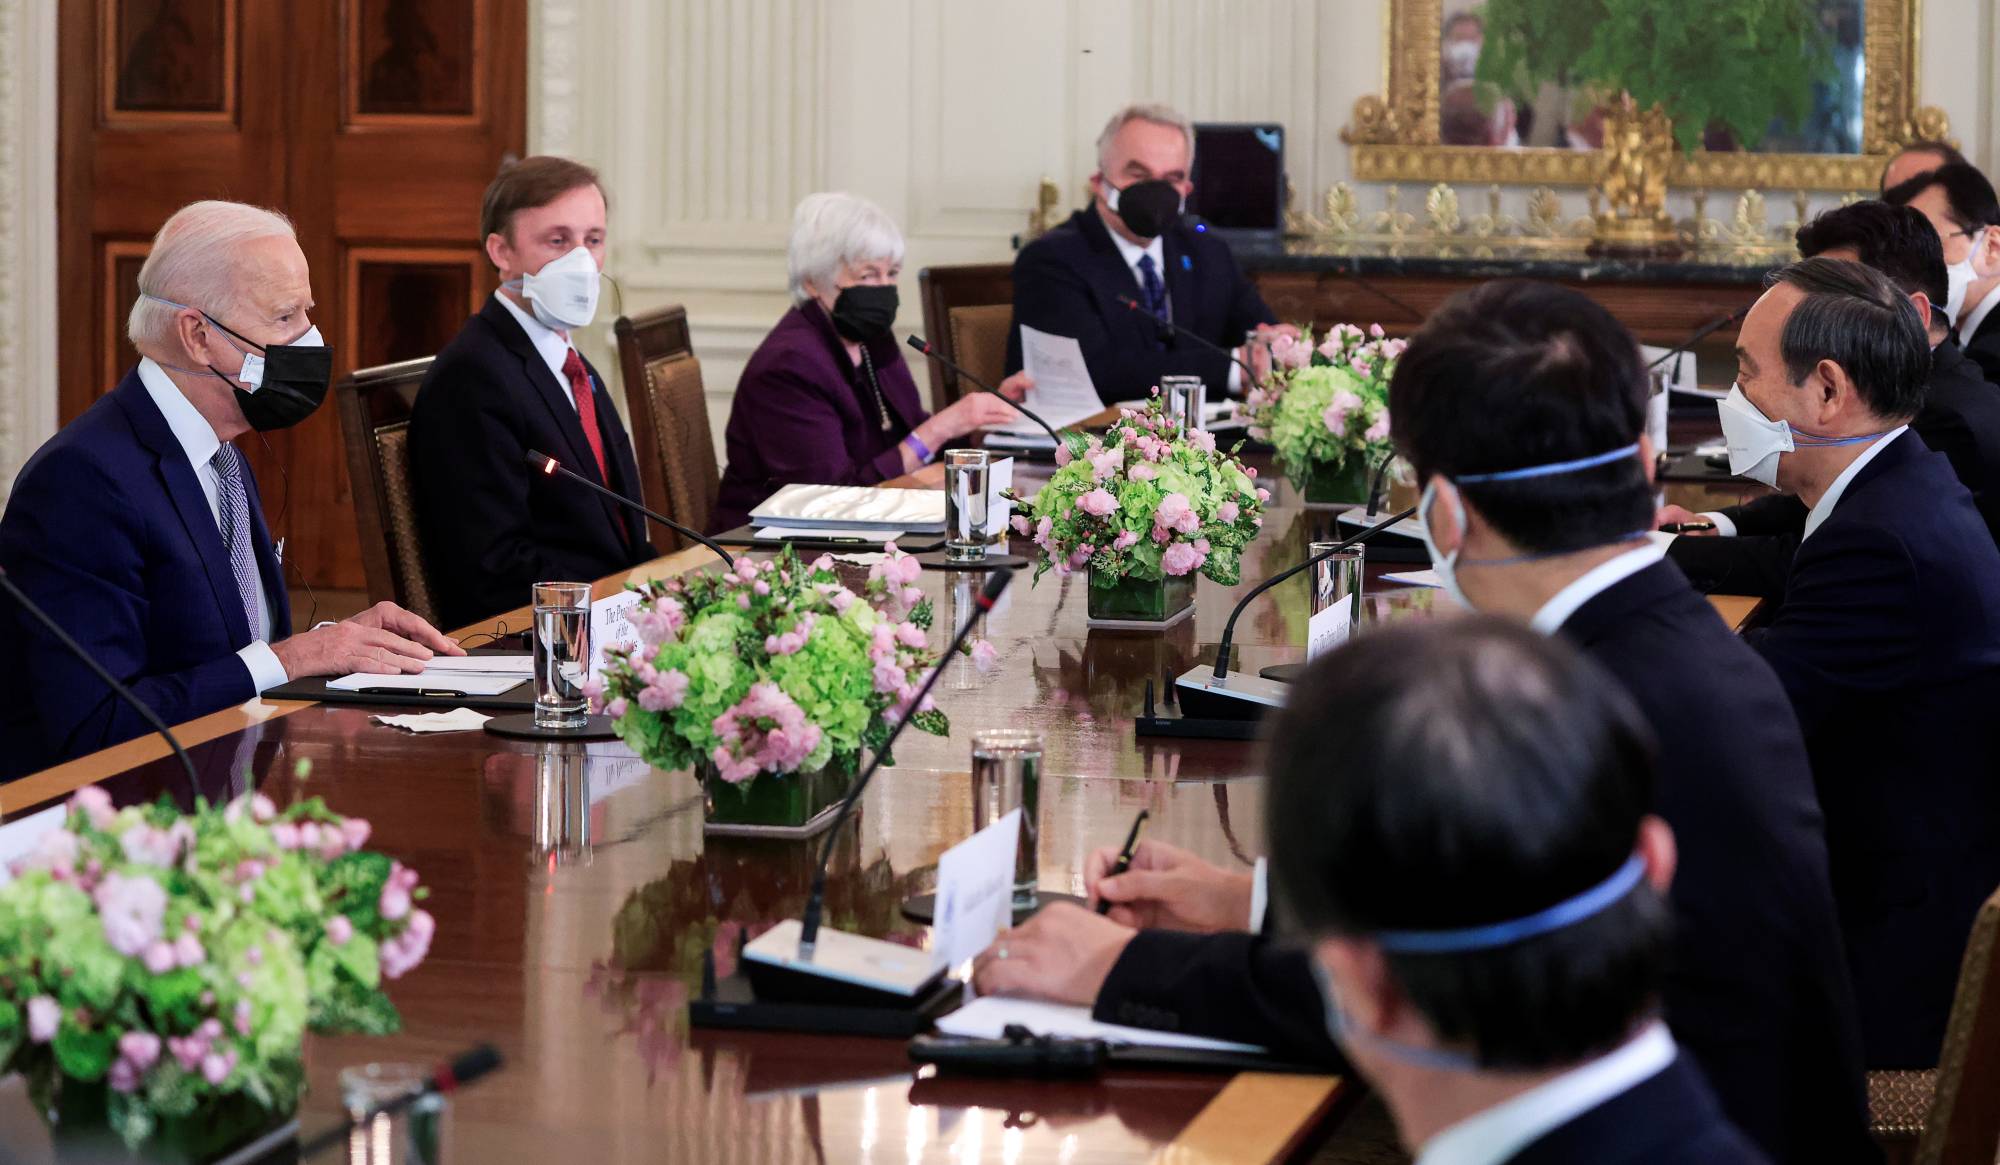 U.S. President Joe Biden meets with Japan’s Prime Minister Yoshihide Suga at the White House in Washington